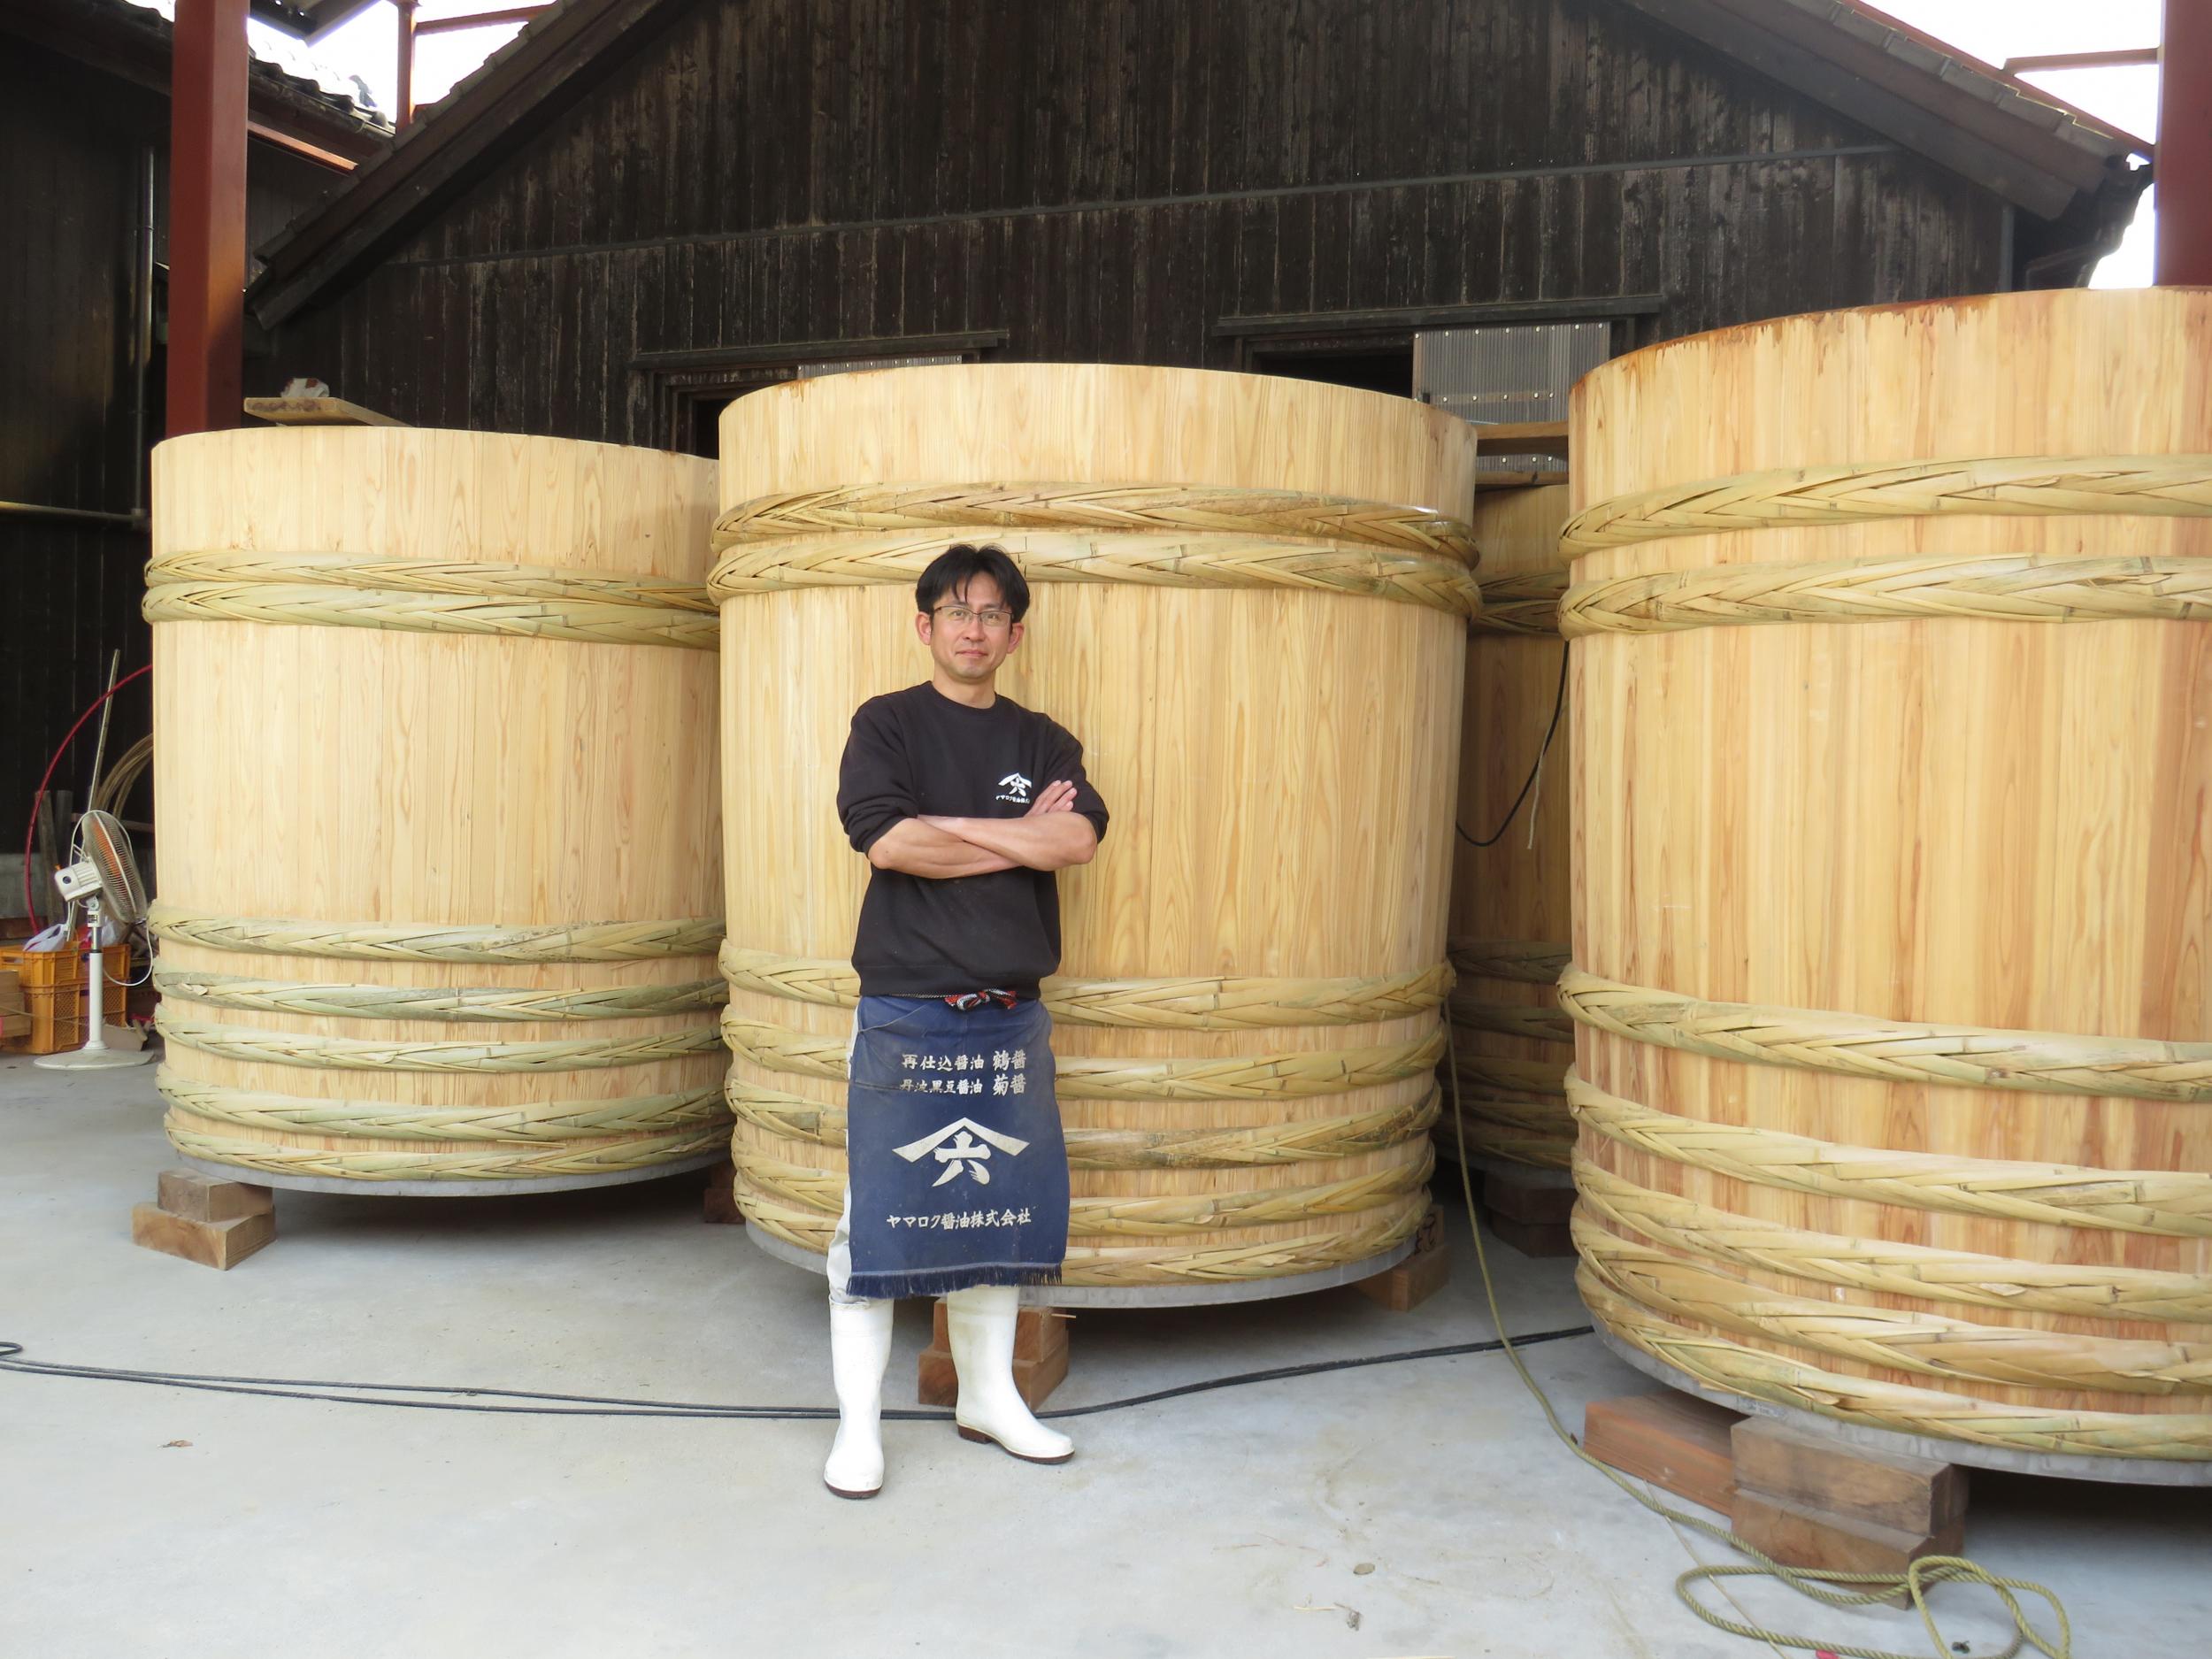 Yasuo Yamamoto and his ‘talking barrels’